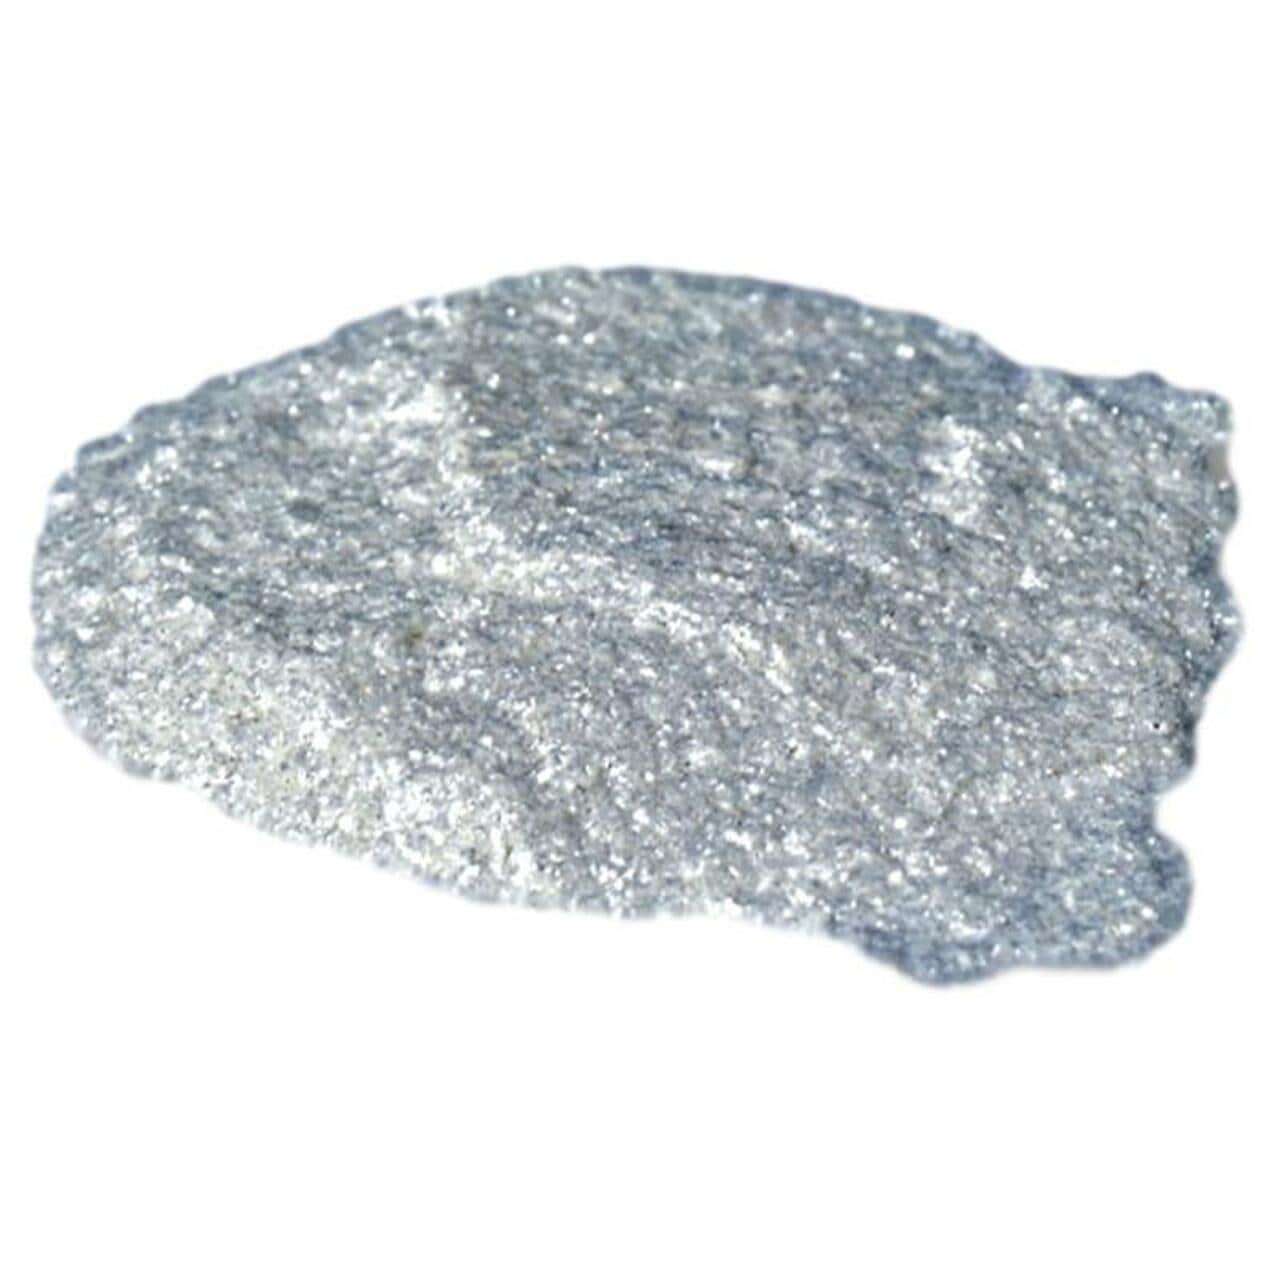 Metallic Powder Additives  Purchase Metallix Powder for Epoxy Online -  Stone Coat Countertops